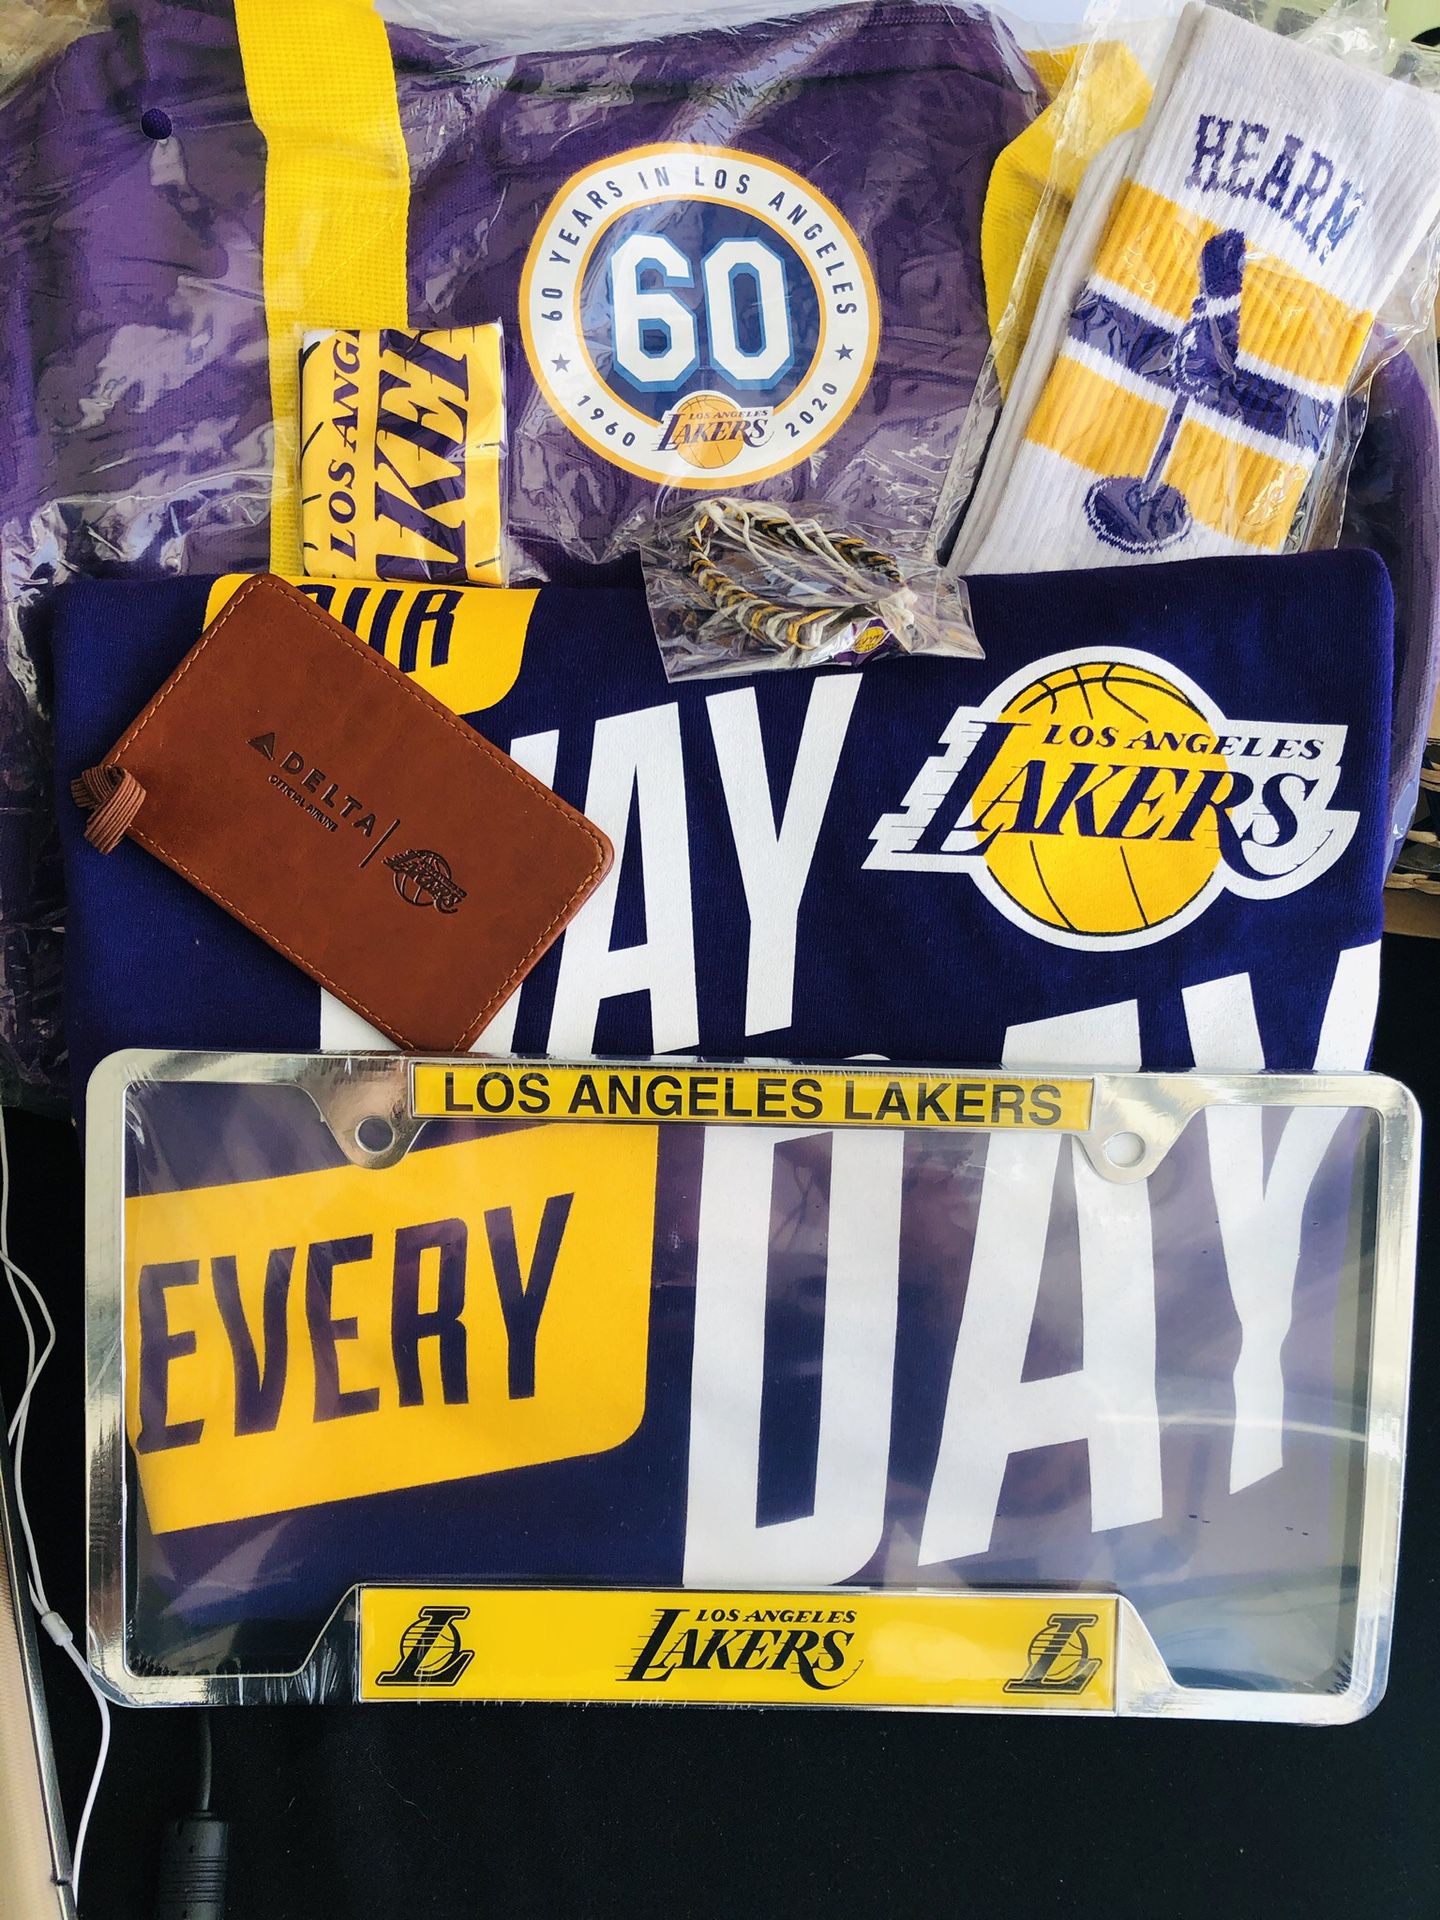 LA Lakers Duffle Bag Fan Bundle!